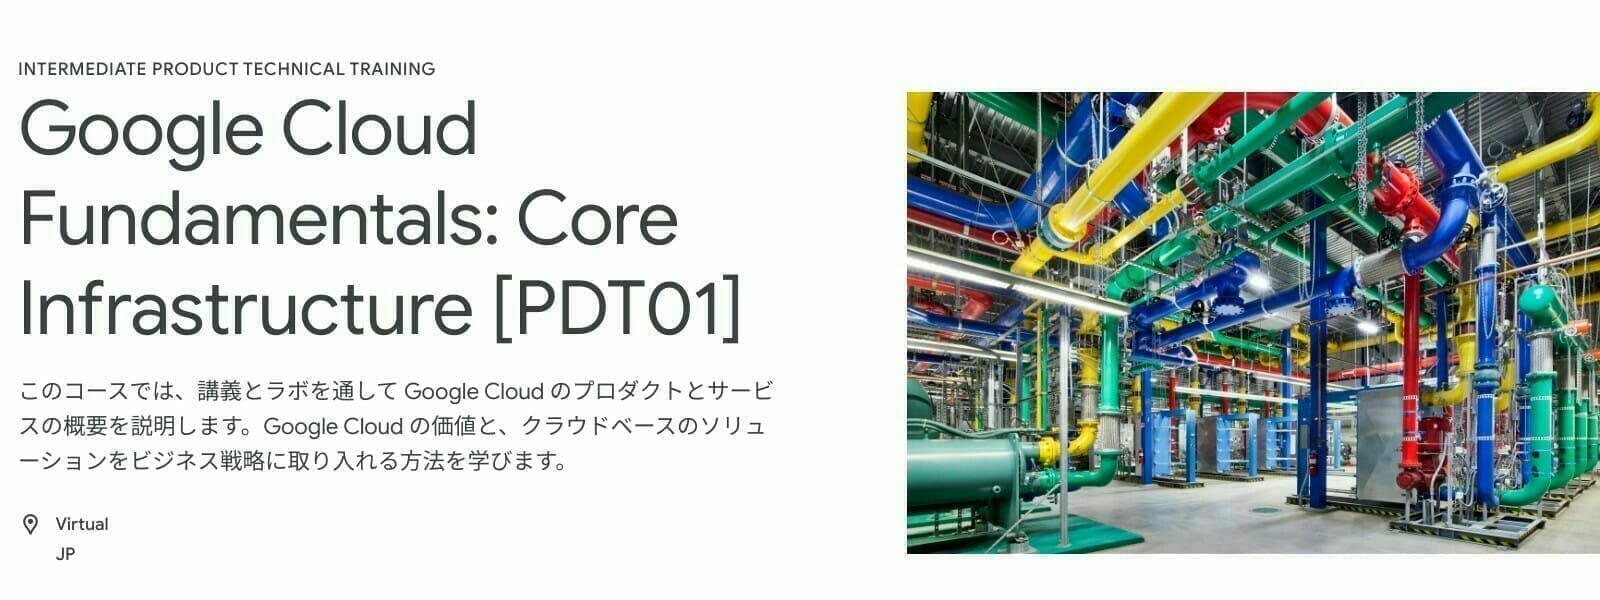 [GCP] Google Cloud Fundamentals: Core Infrastructure [PDT01]